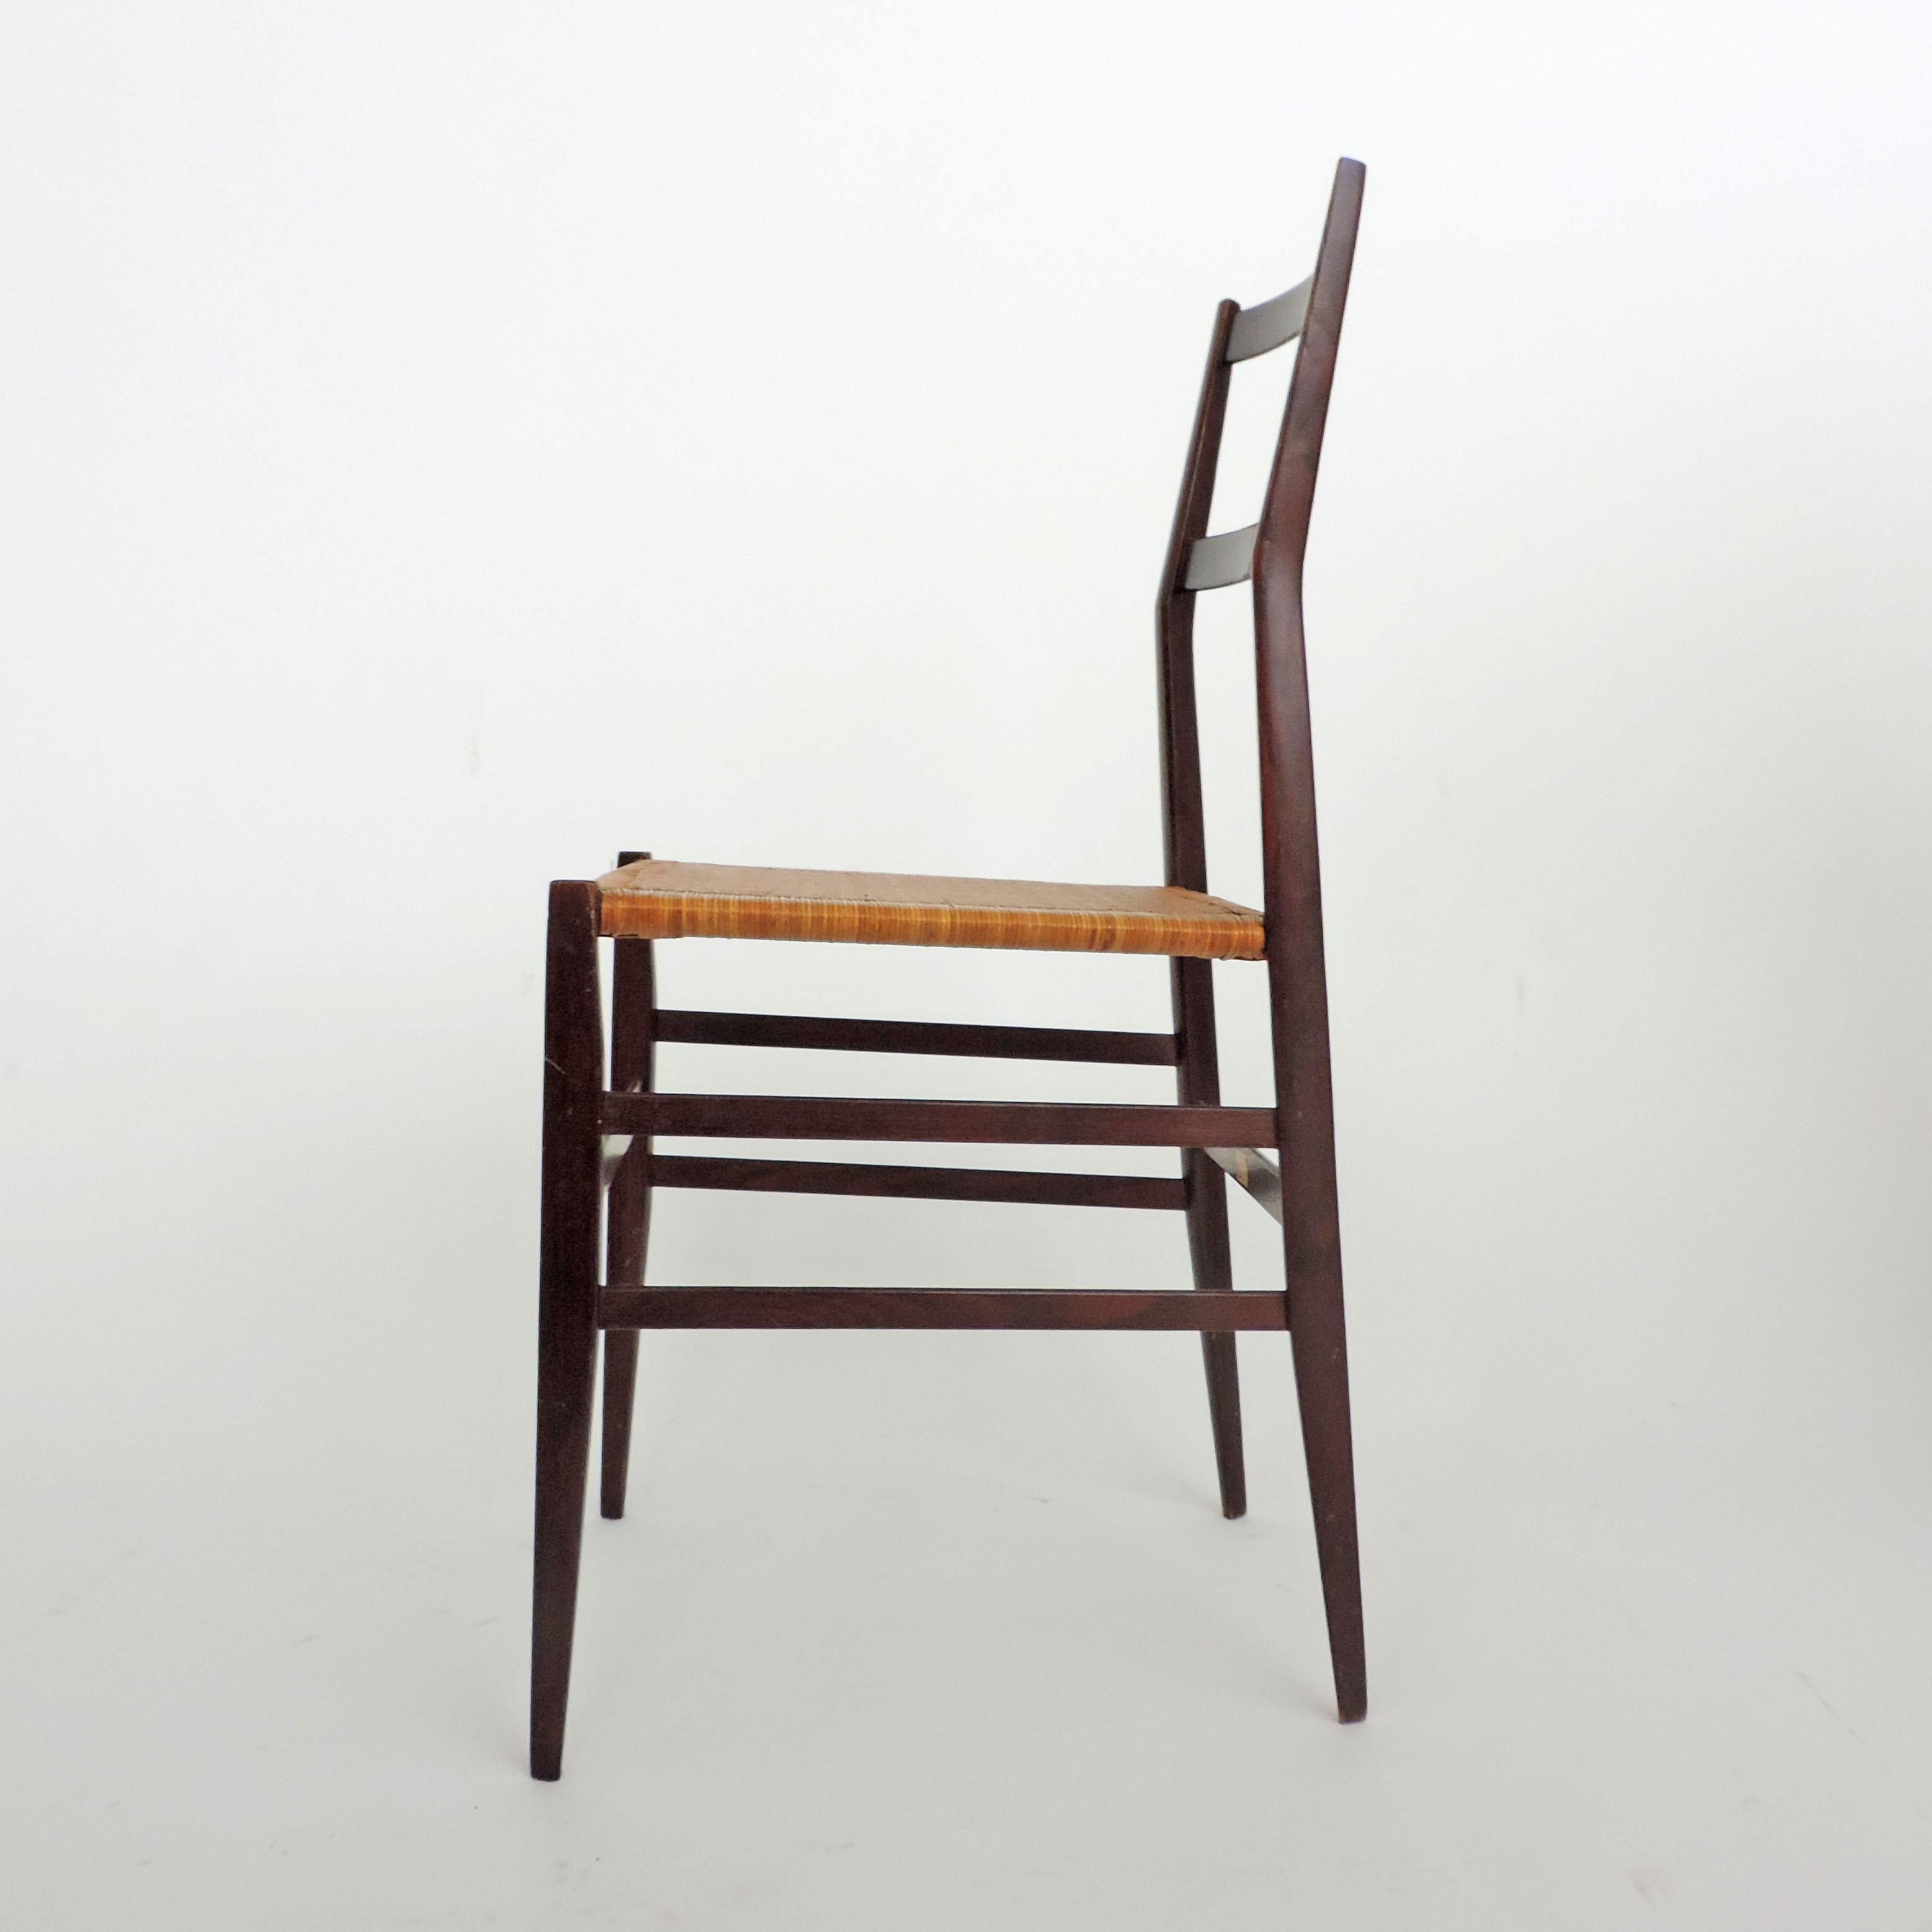 Italian Gio Ponti Superleggera Chair for Cassina, Italy, 1957